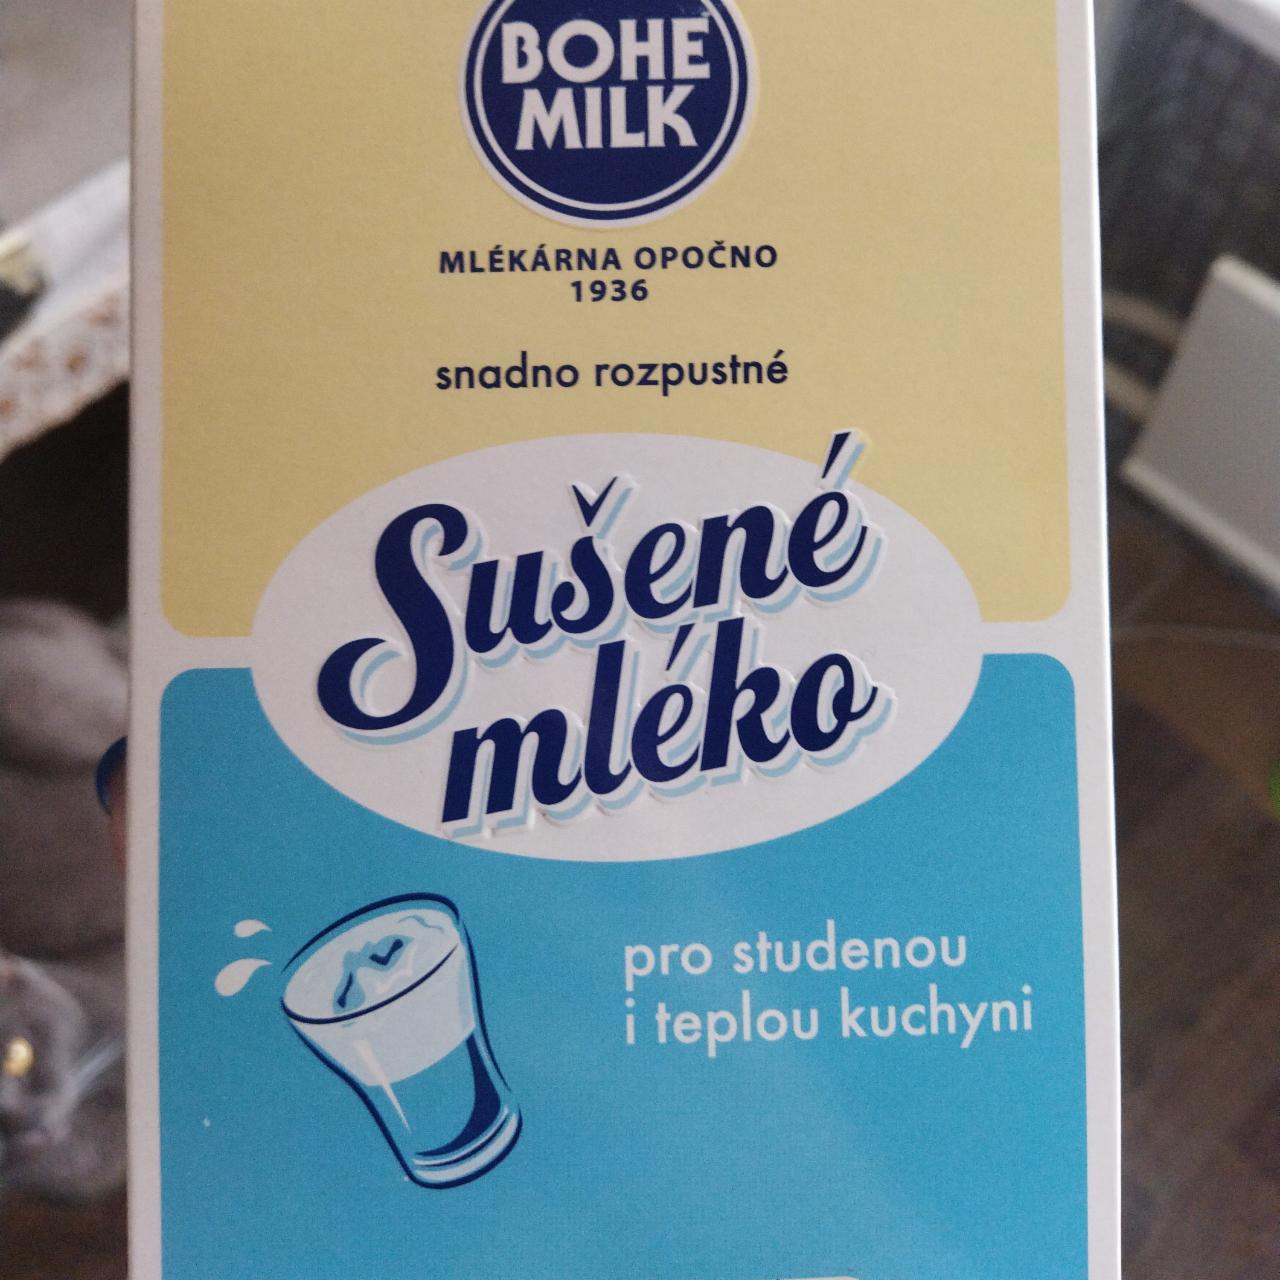 Фото - Sušené mléko polotučné Bohemilk